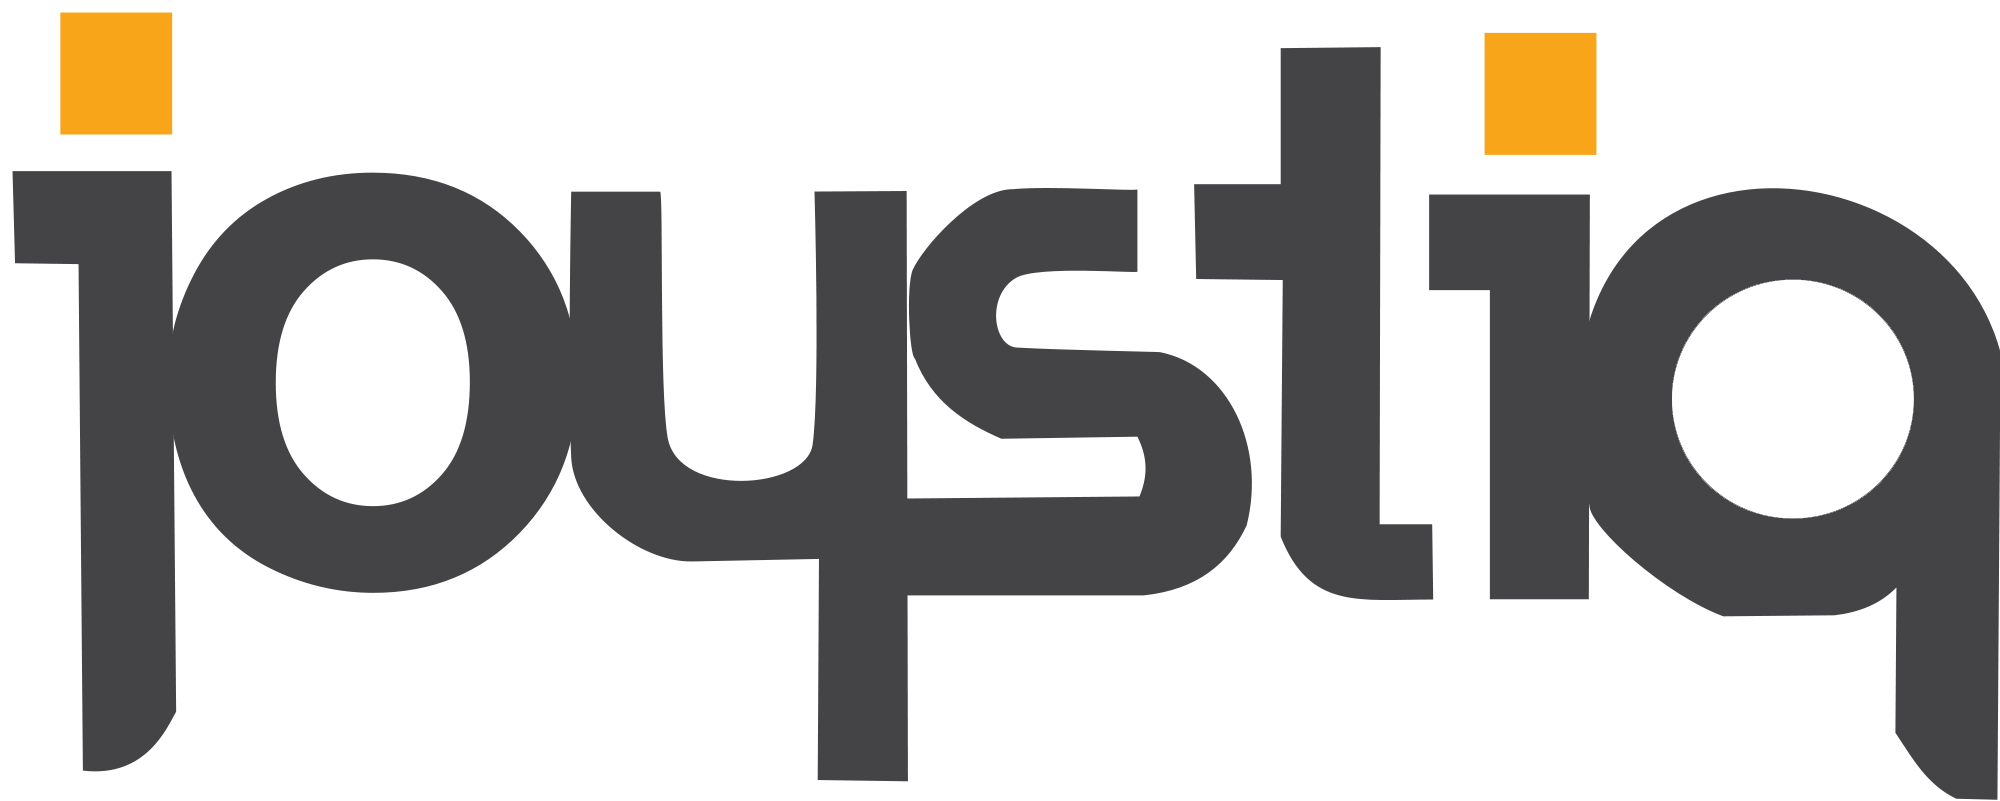 Joystiq Logo - AOL is Shutting Down Joystiq - n3rdabl3